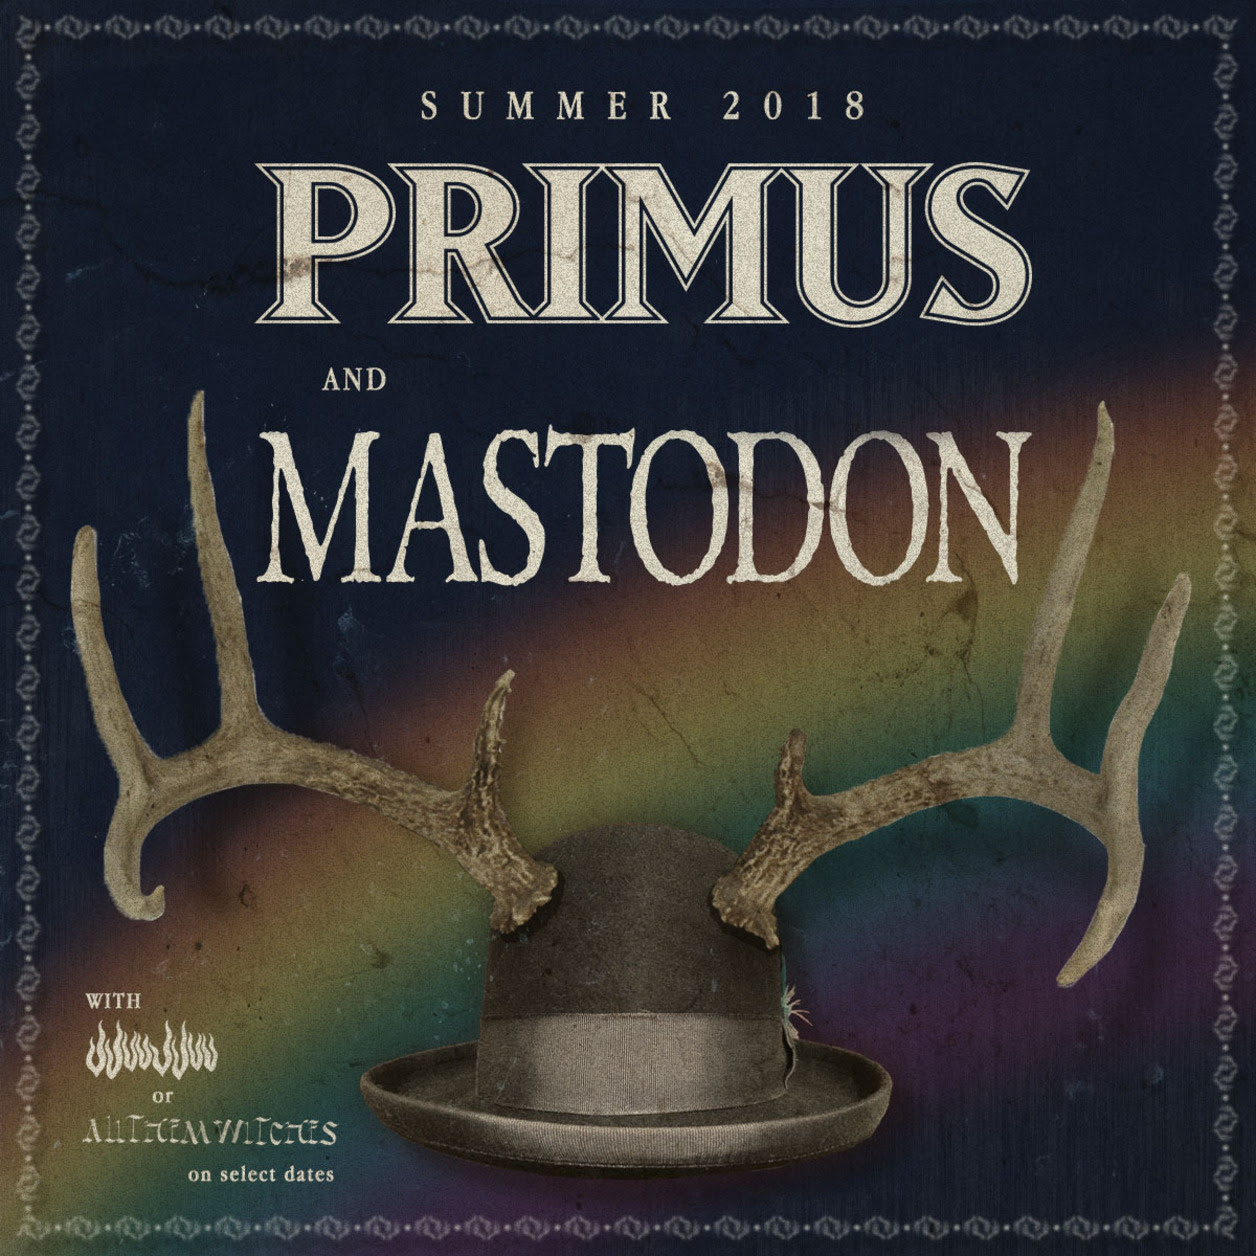 Primus and Mastodon tour. Photo provided.